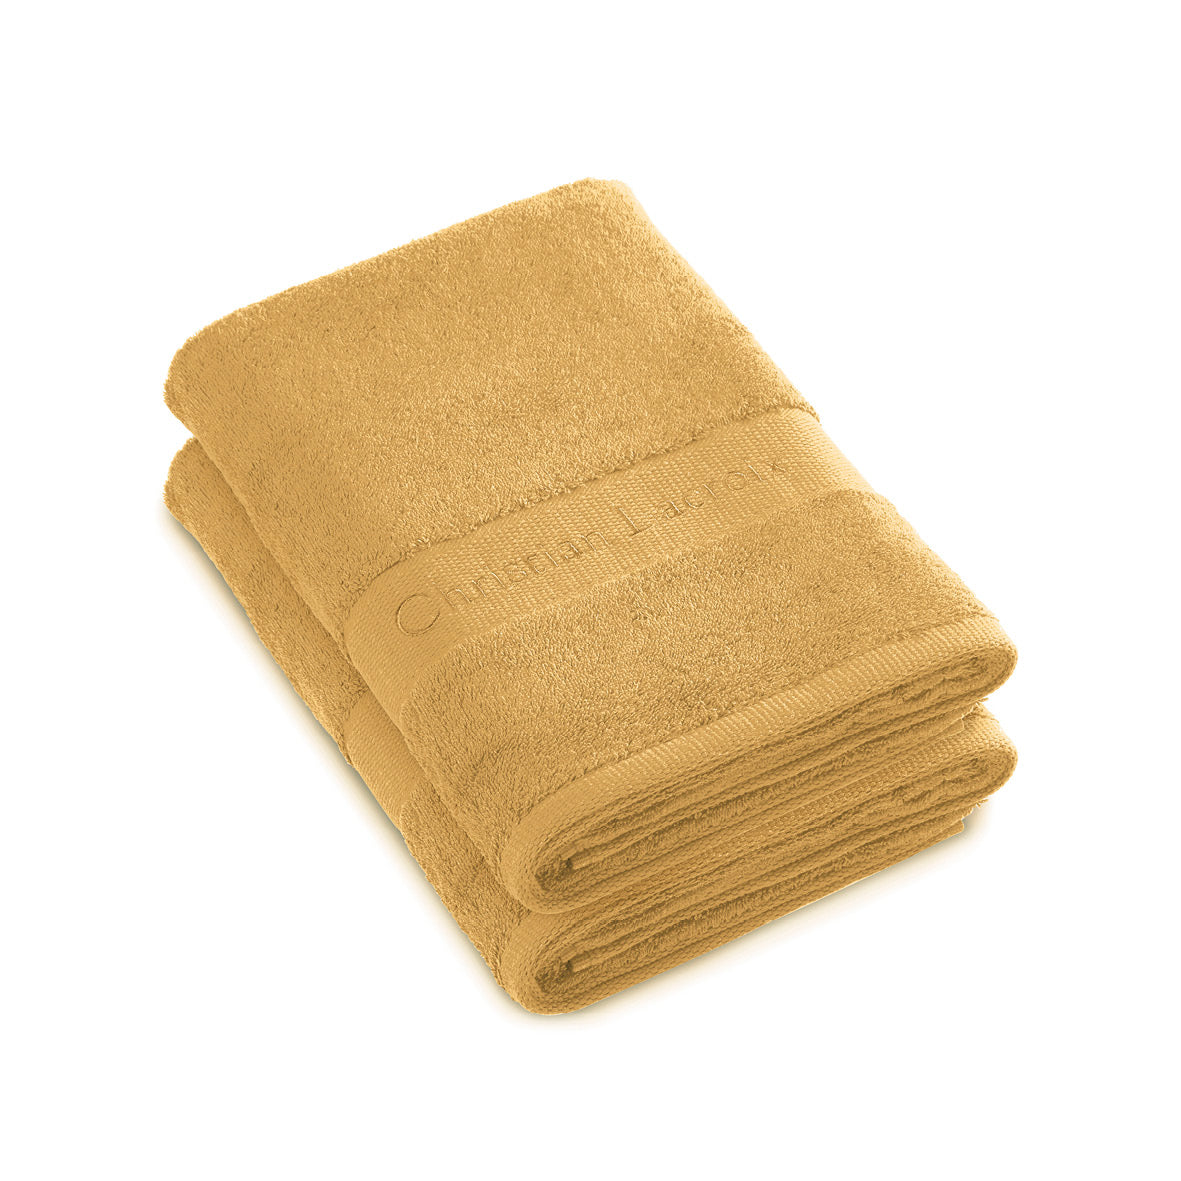 Set of 2 bath towels Mustard yellow